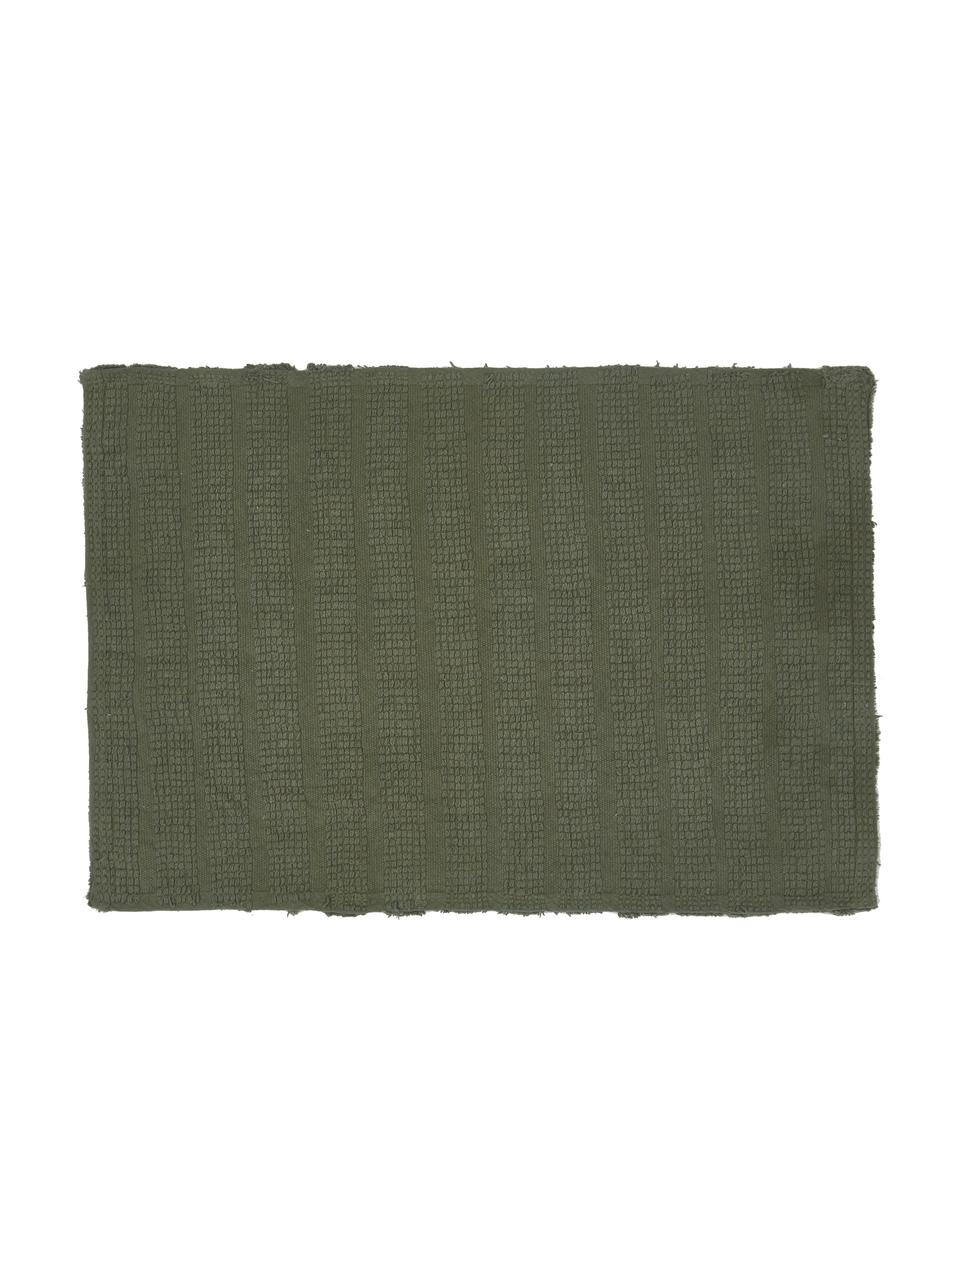 Alfombrilla de baño Board, 100% algodón
Gramaje superior 1900 g/m², Verde salvia, An 60 x L 90 cm